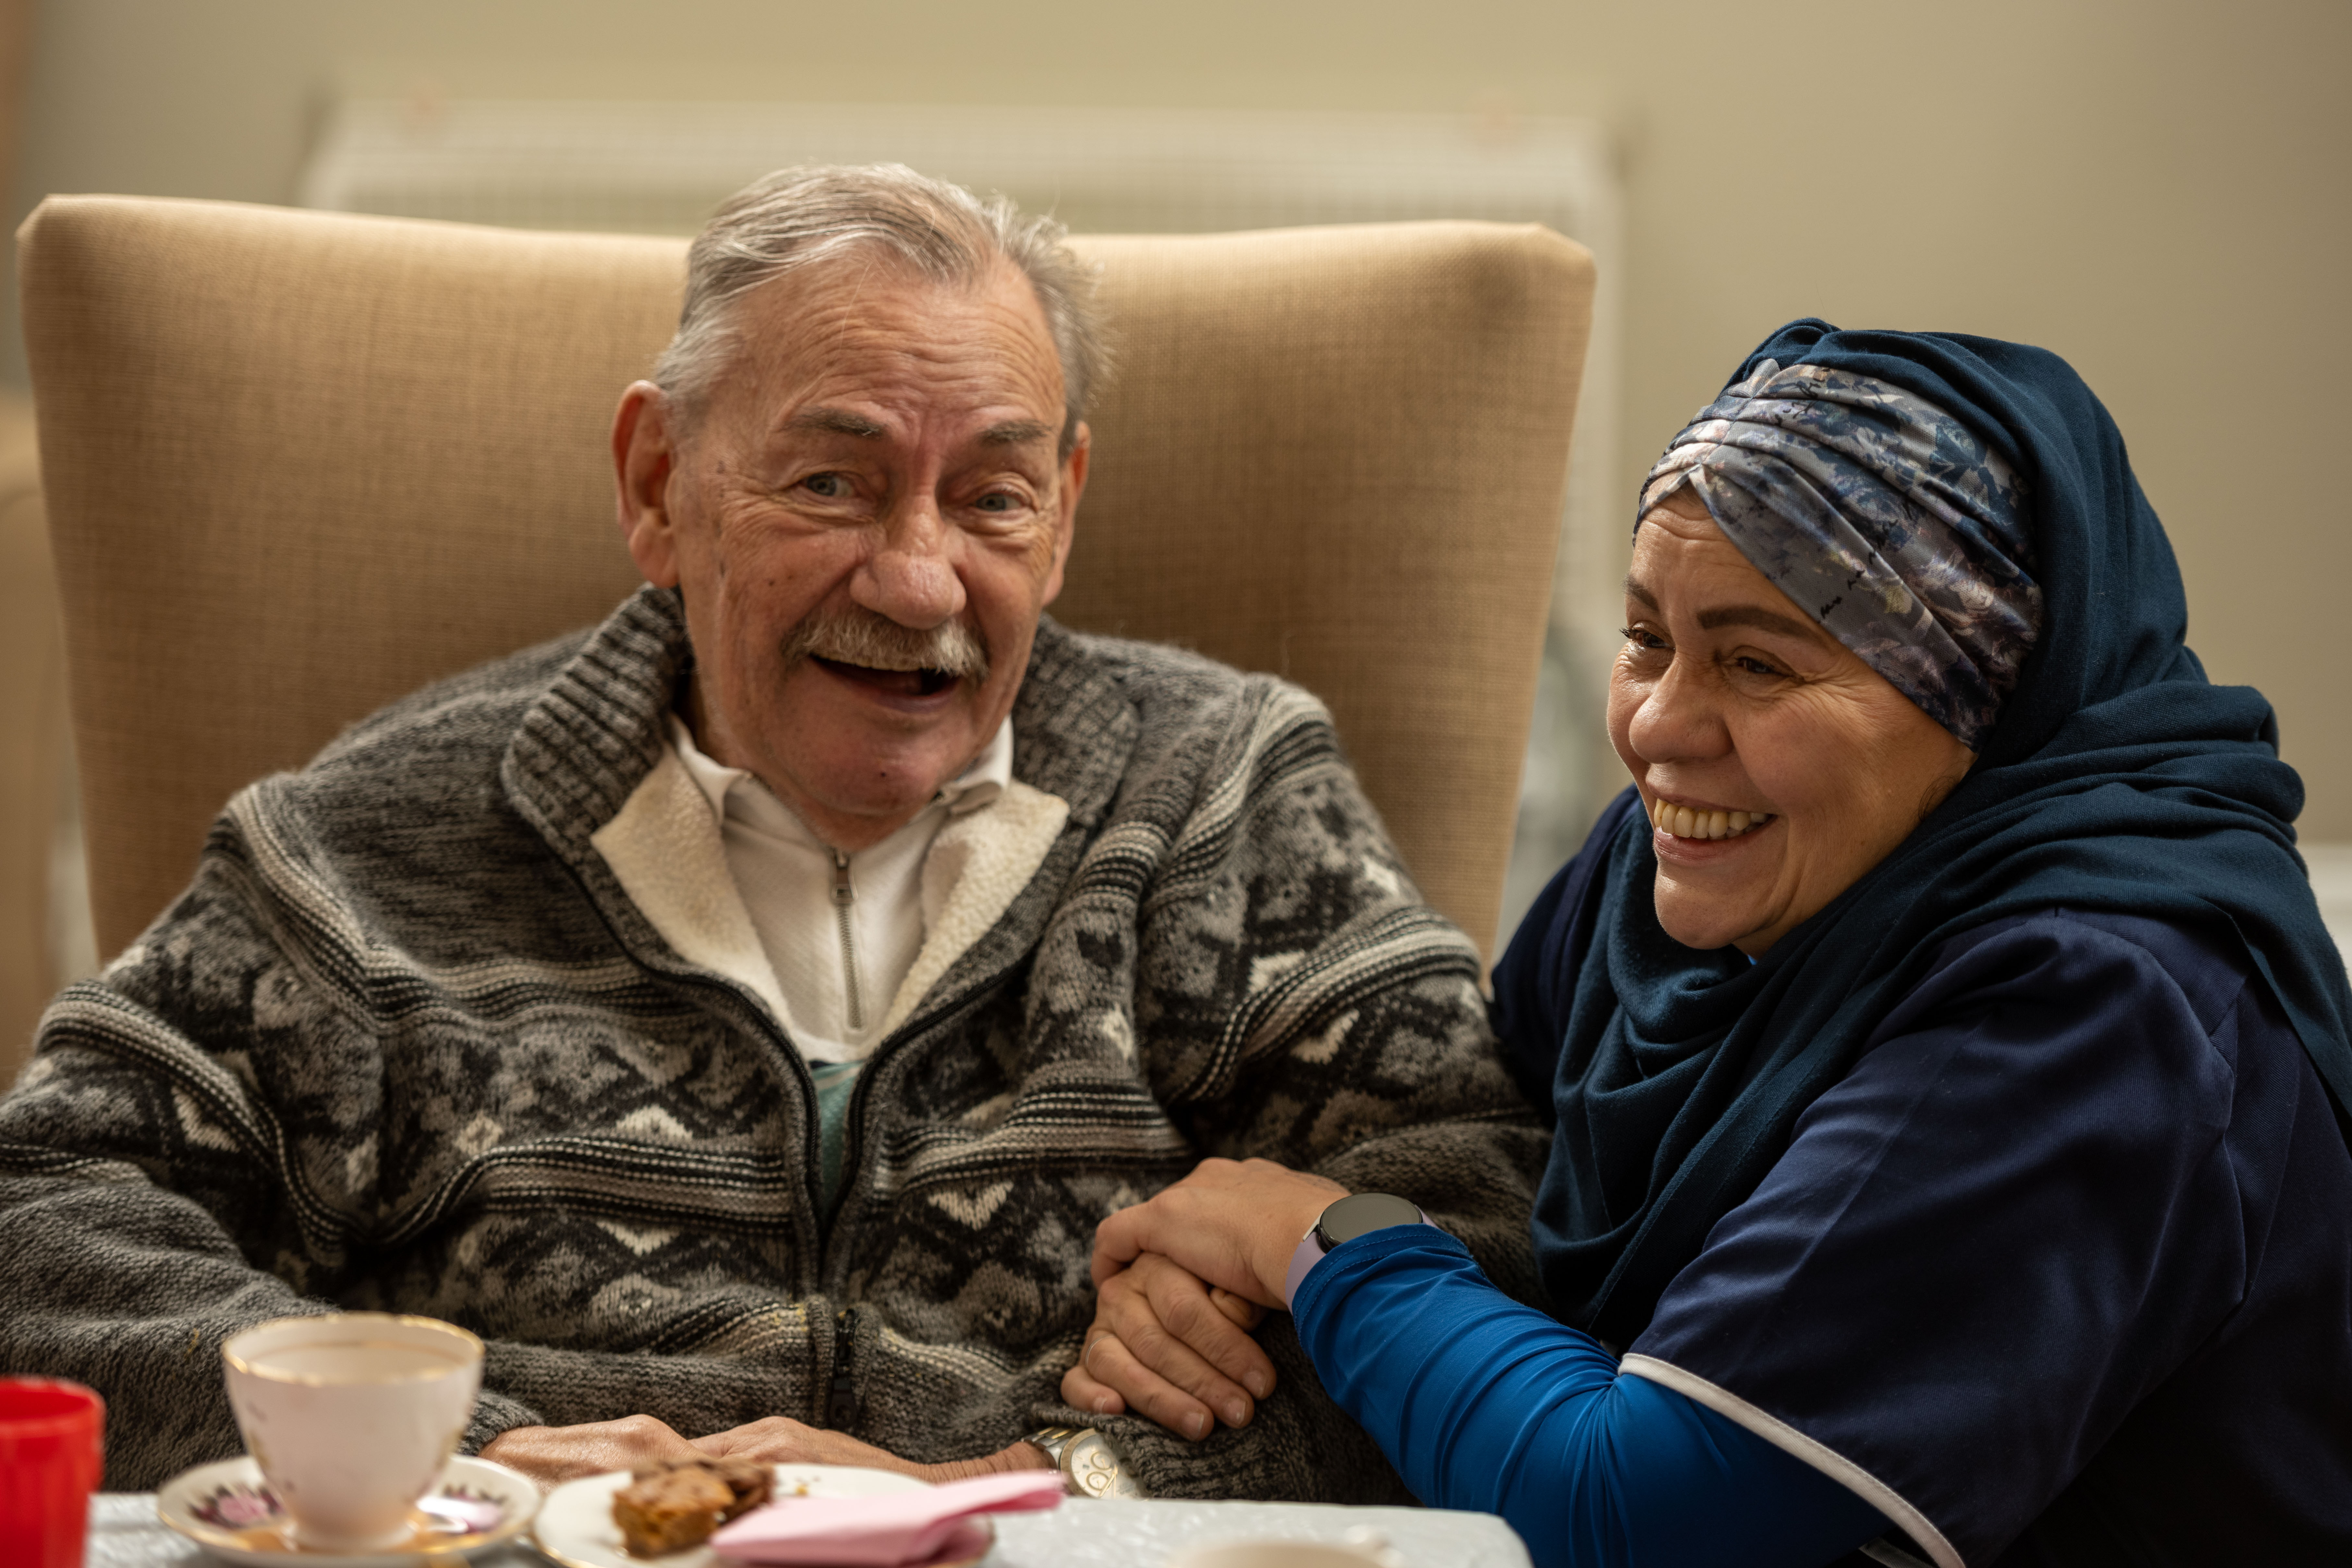 Elderly gentleman and nurse sit and smile together